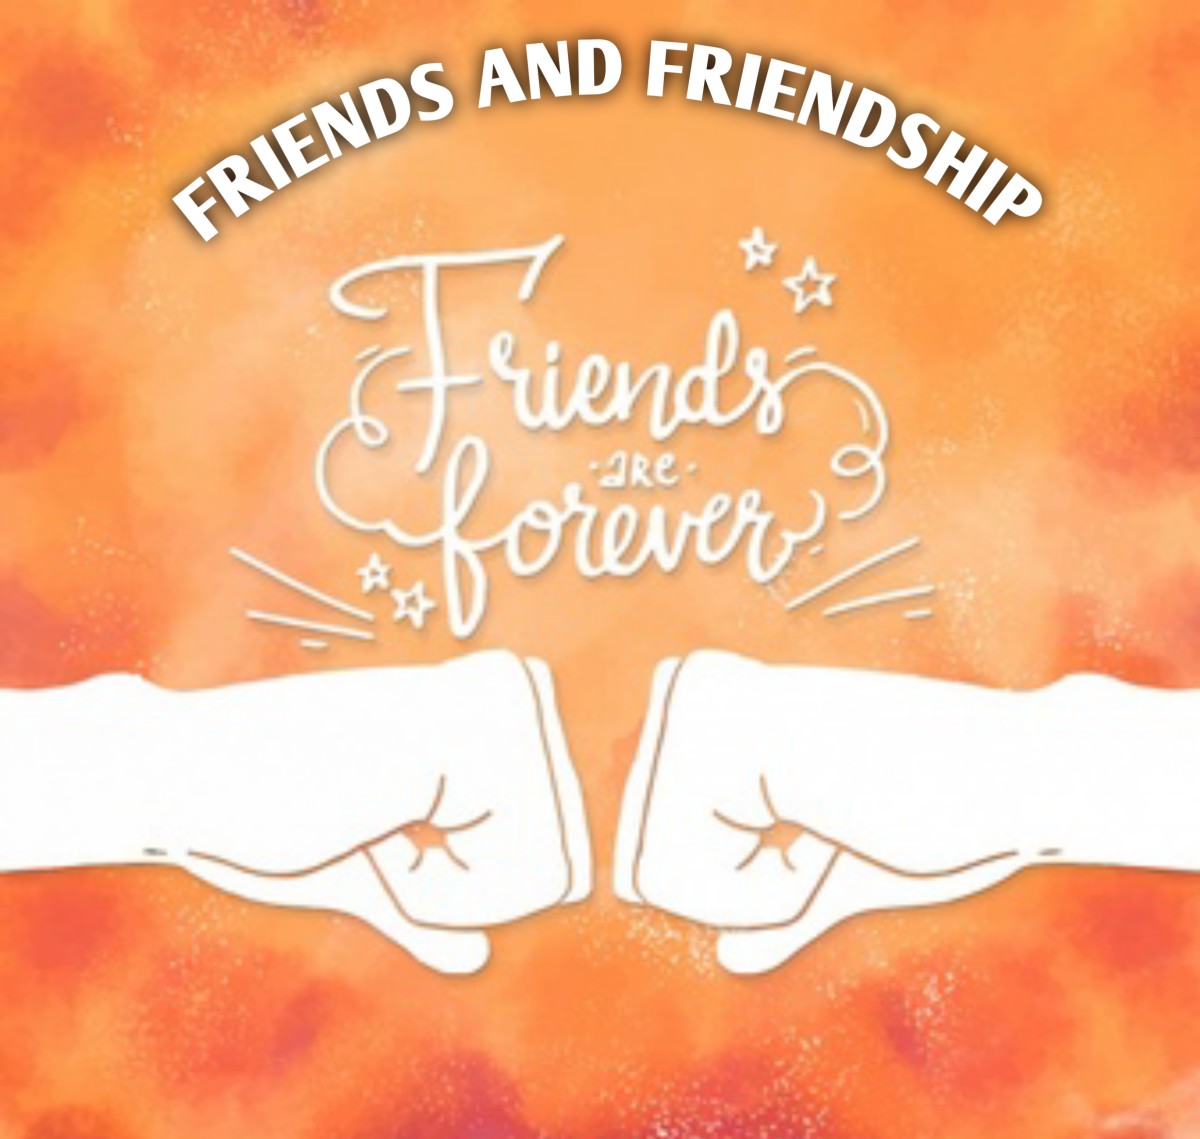 friends-and-friendship-com